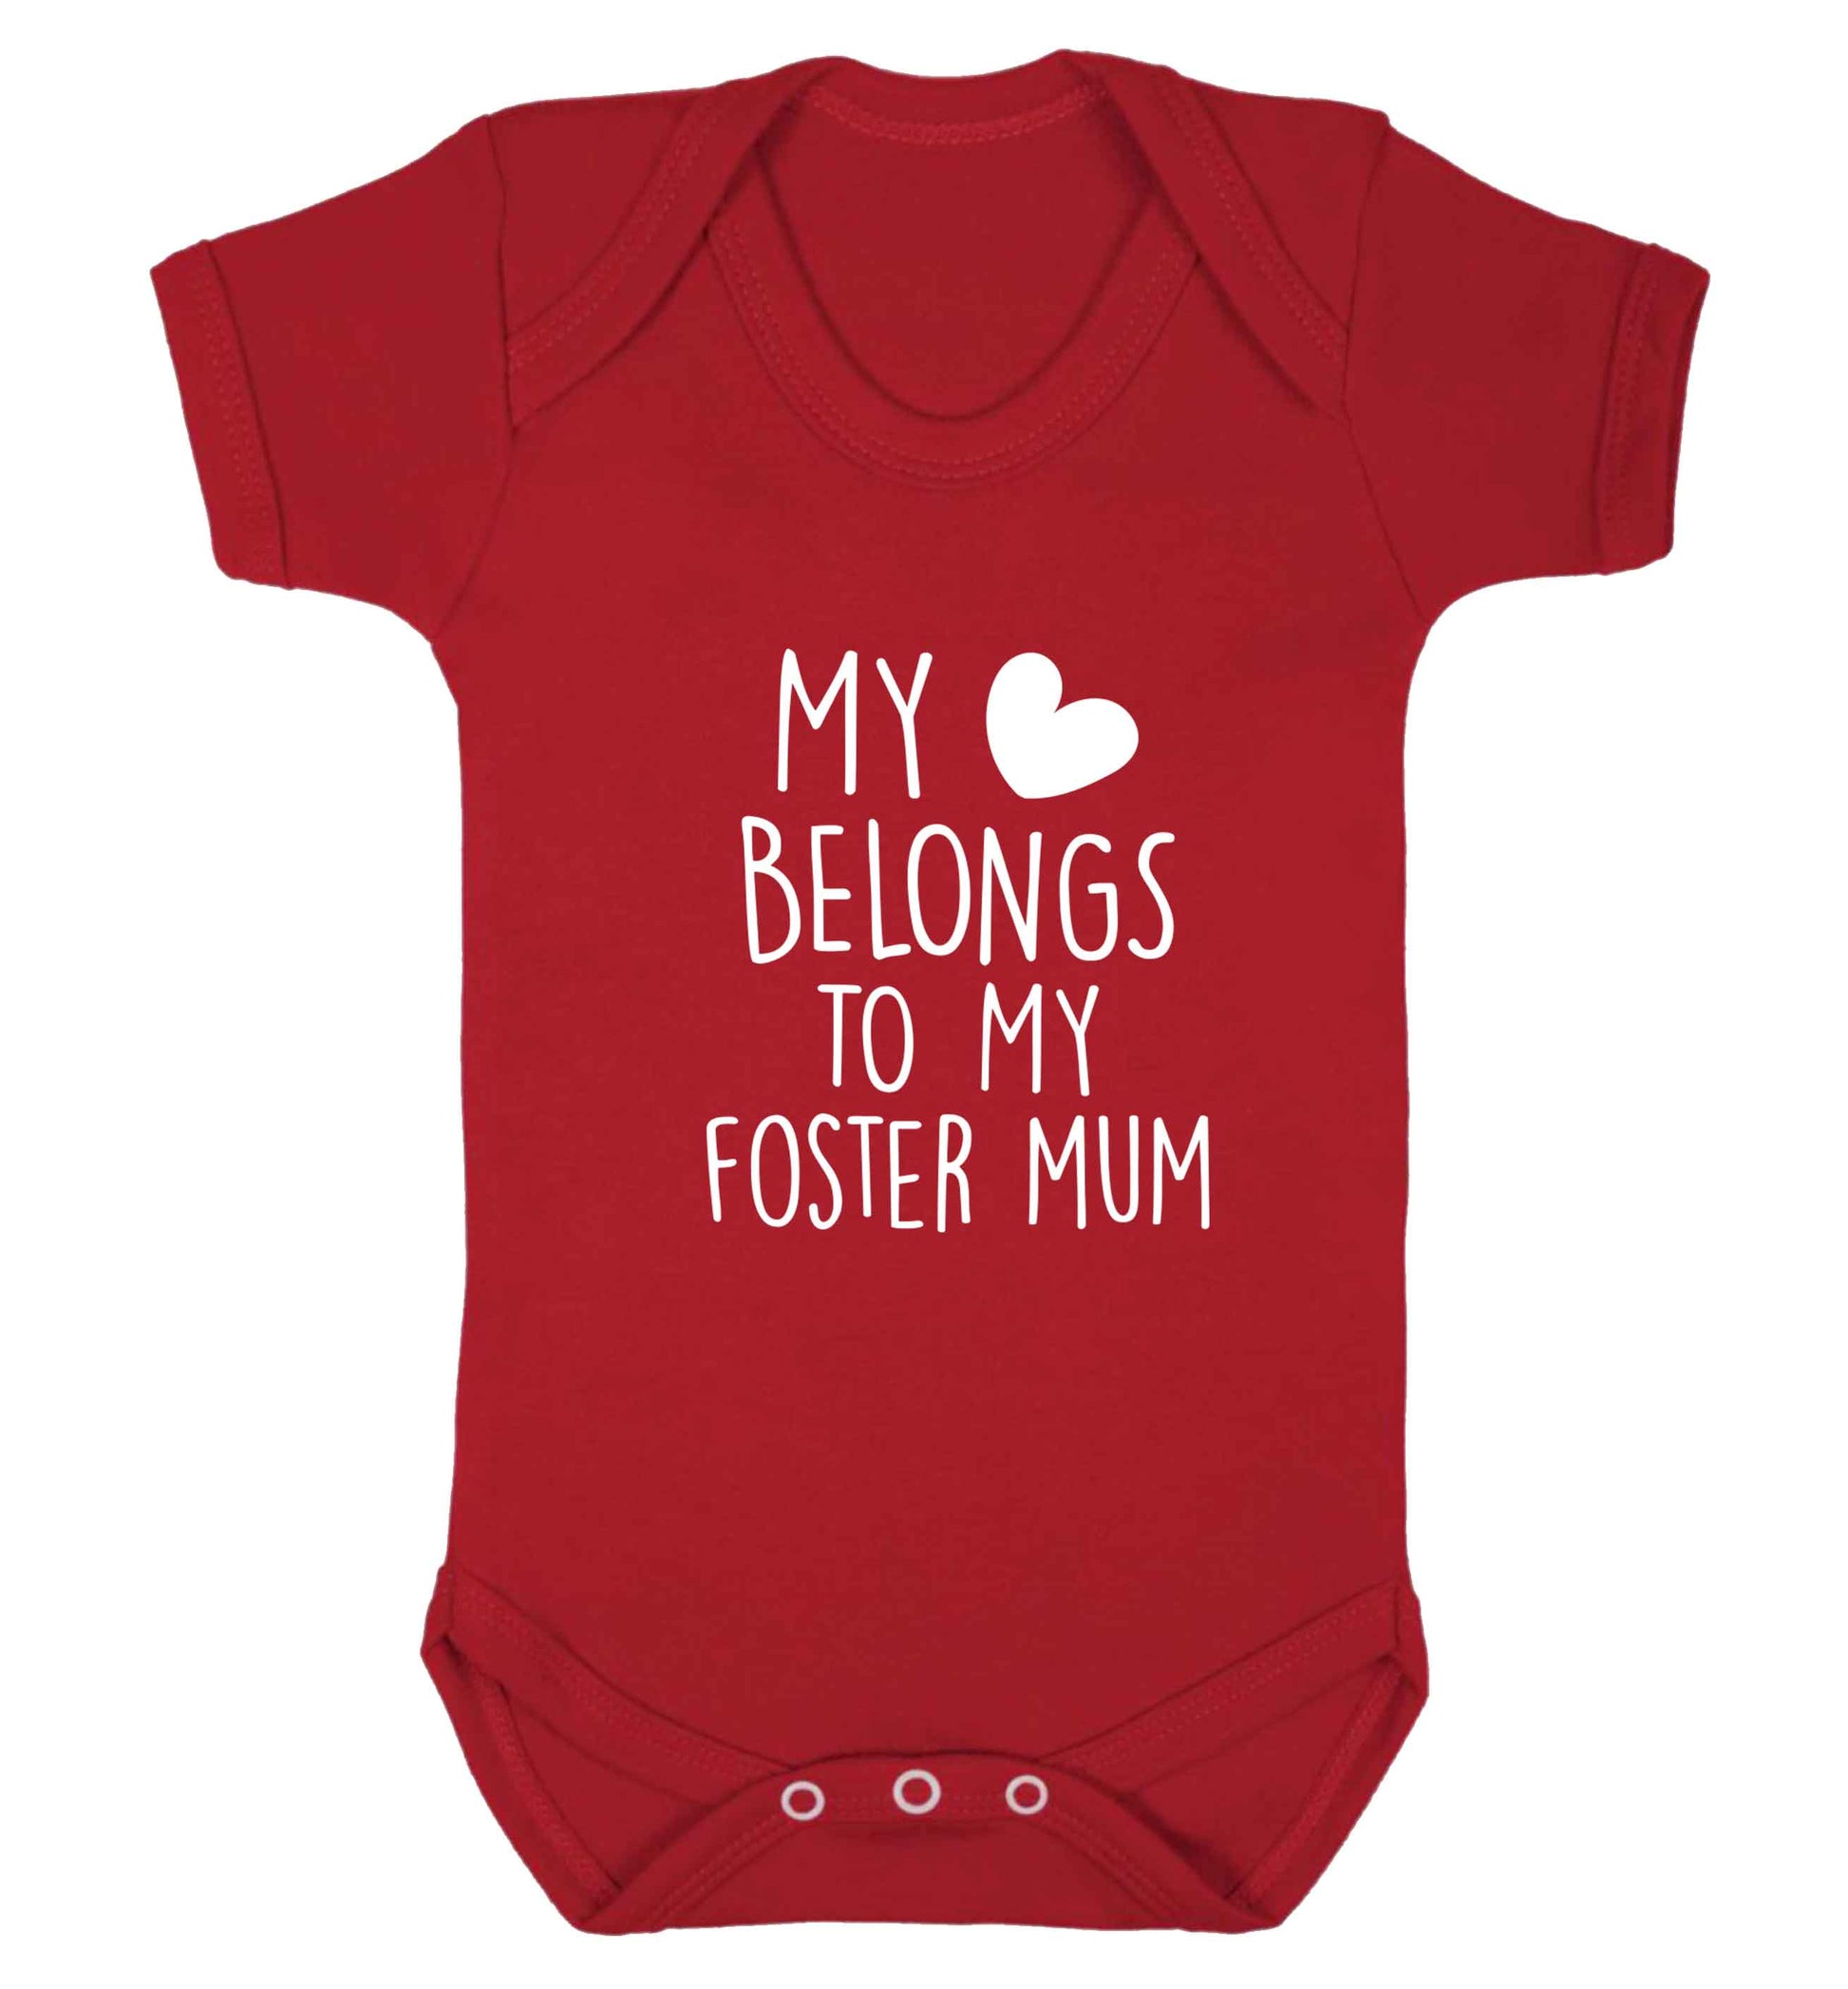 My heart belongs to my foster mum baby vest red 18-24 months